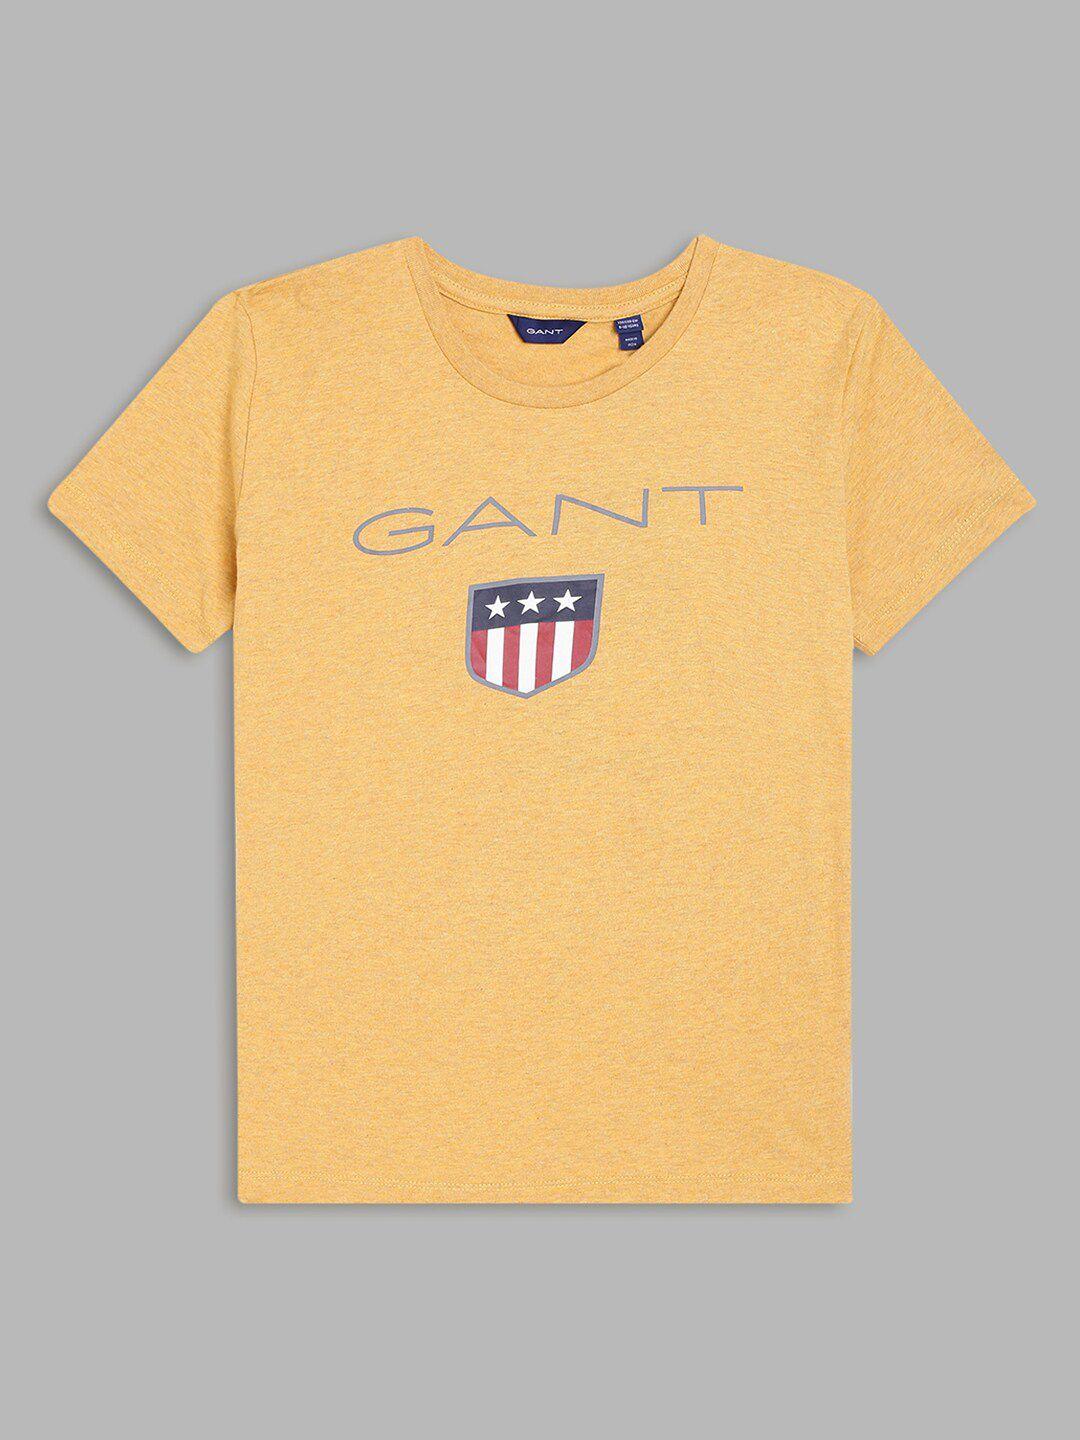 gant boys yellow brand logo printed cotton t-shirt